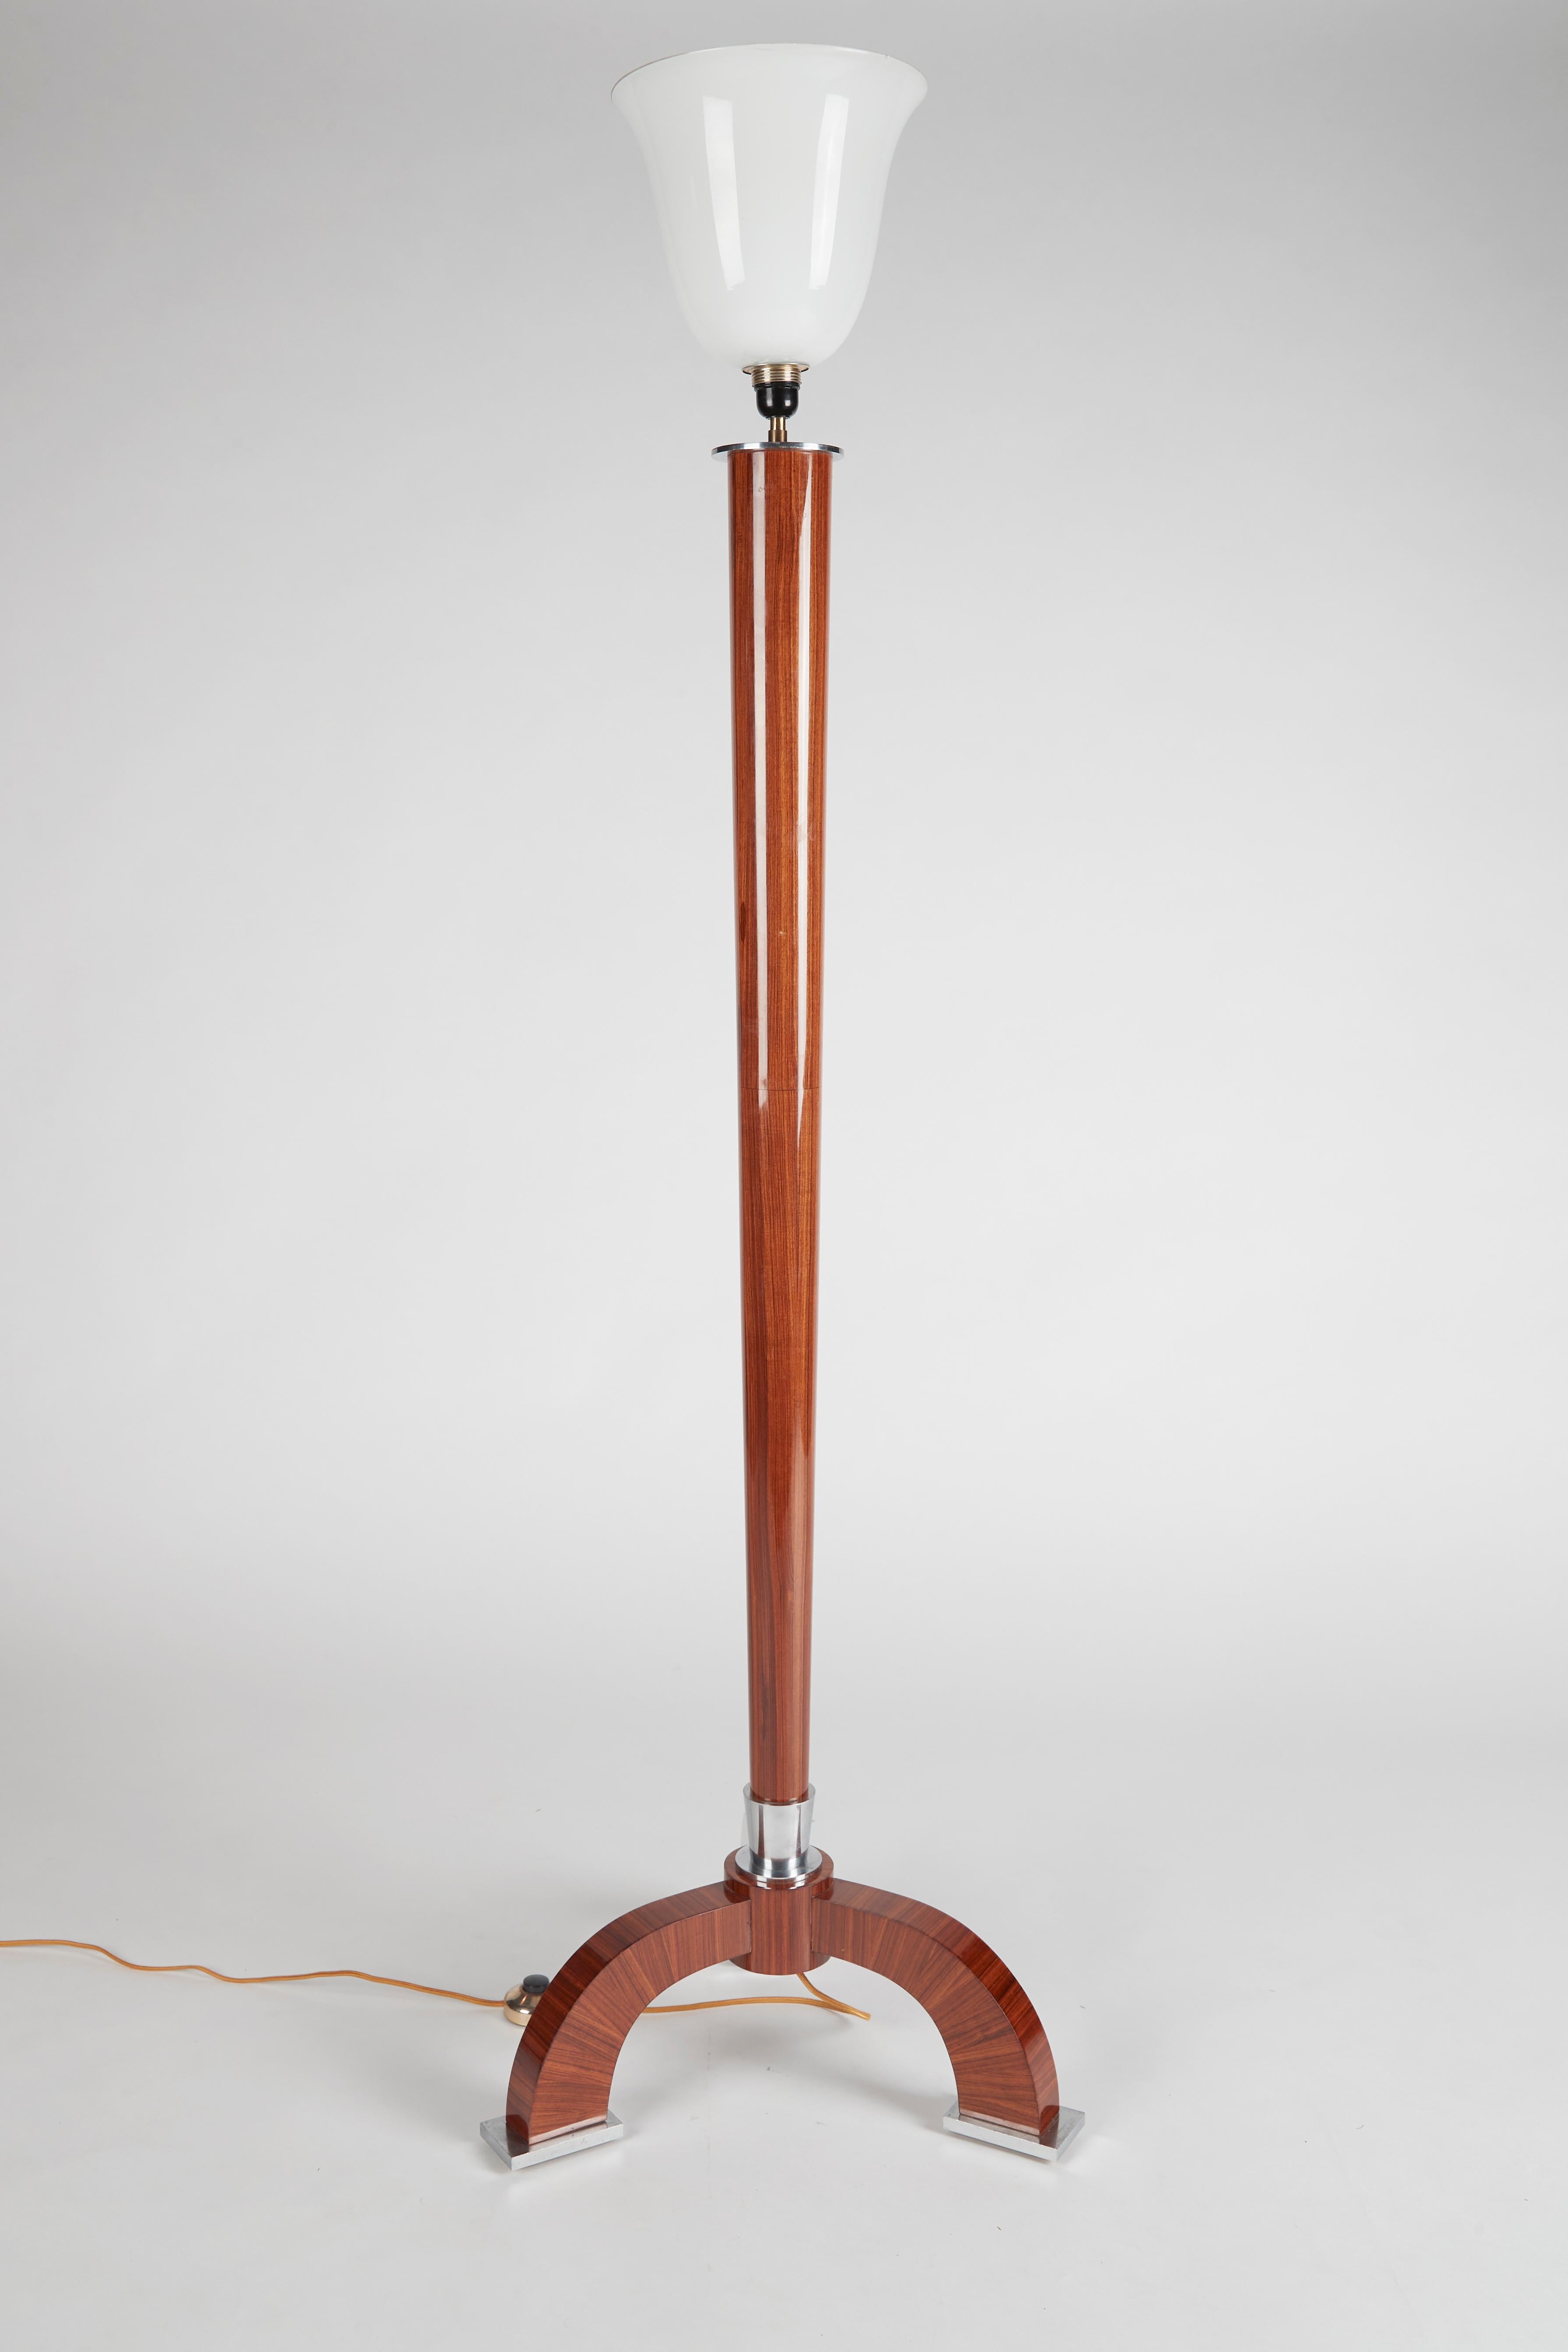 Jules Leleu, Art Deco Tripodal Floor Lamp, Walnut and Chrome, France, circa 1930 For Sale 1